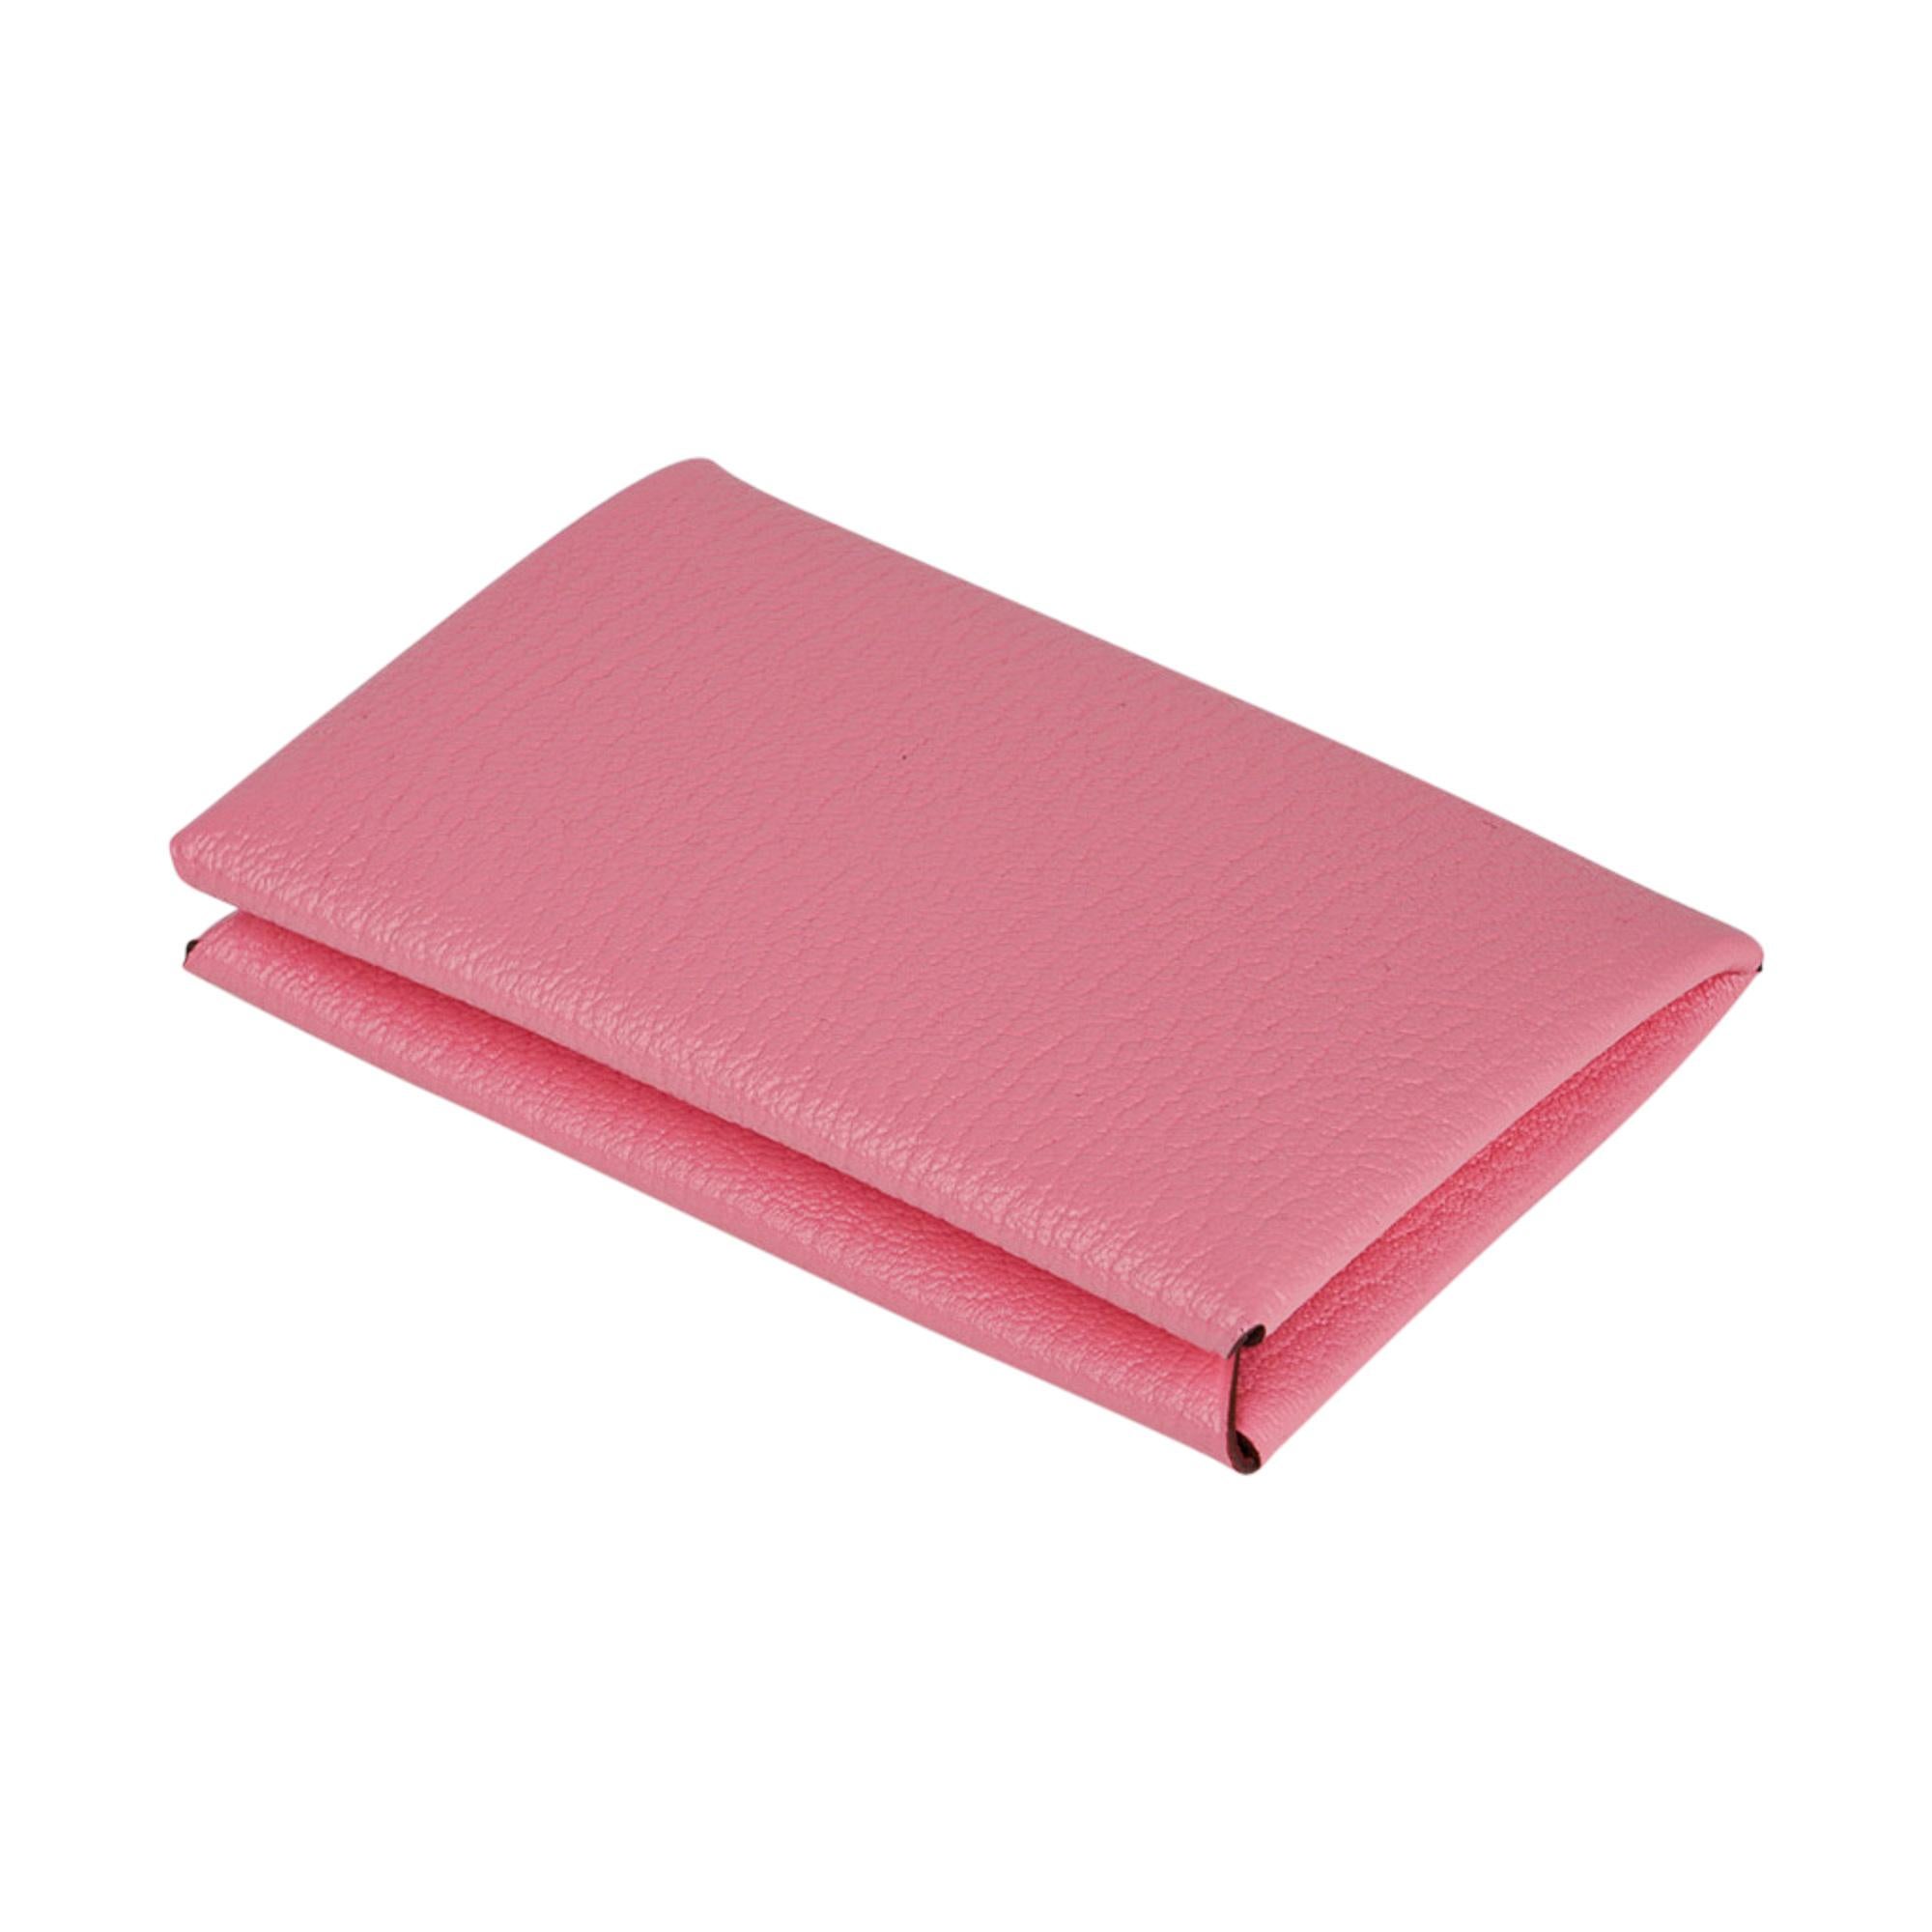 Hermes Calvi Verso Card Holder  Pink Confetti / Brick Chevre Leather New w/Box 1